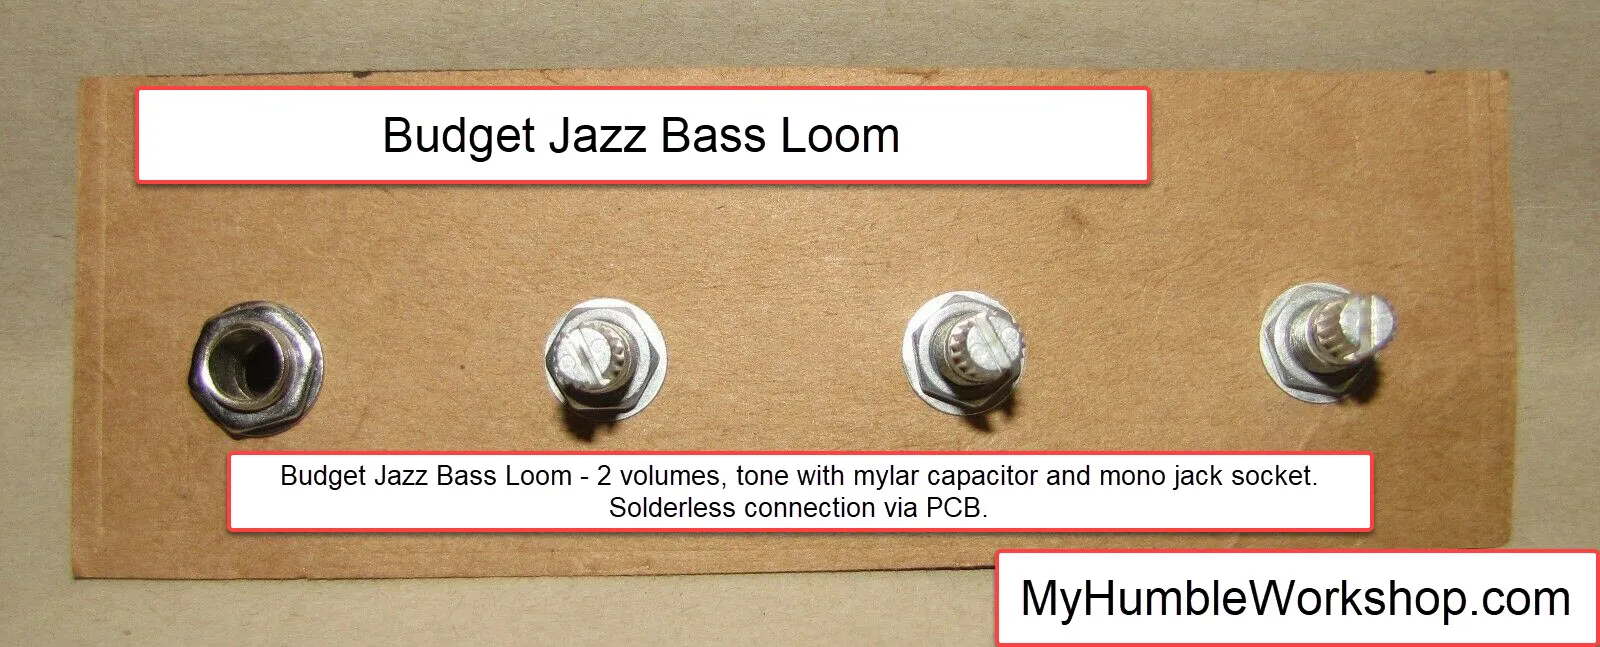 Budget Jazz bass loom